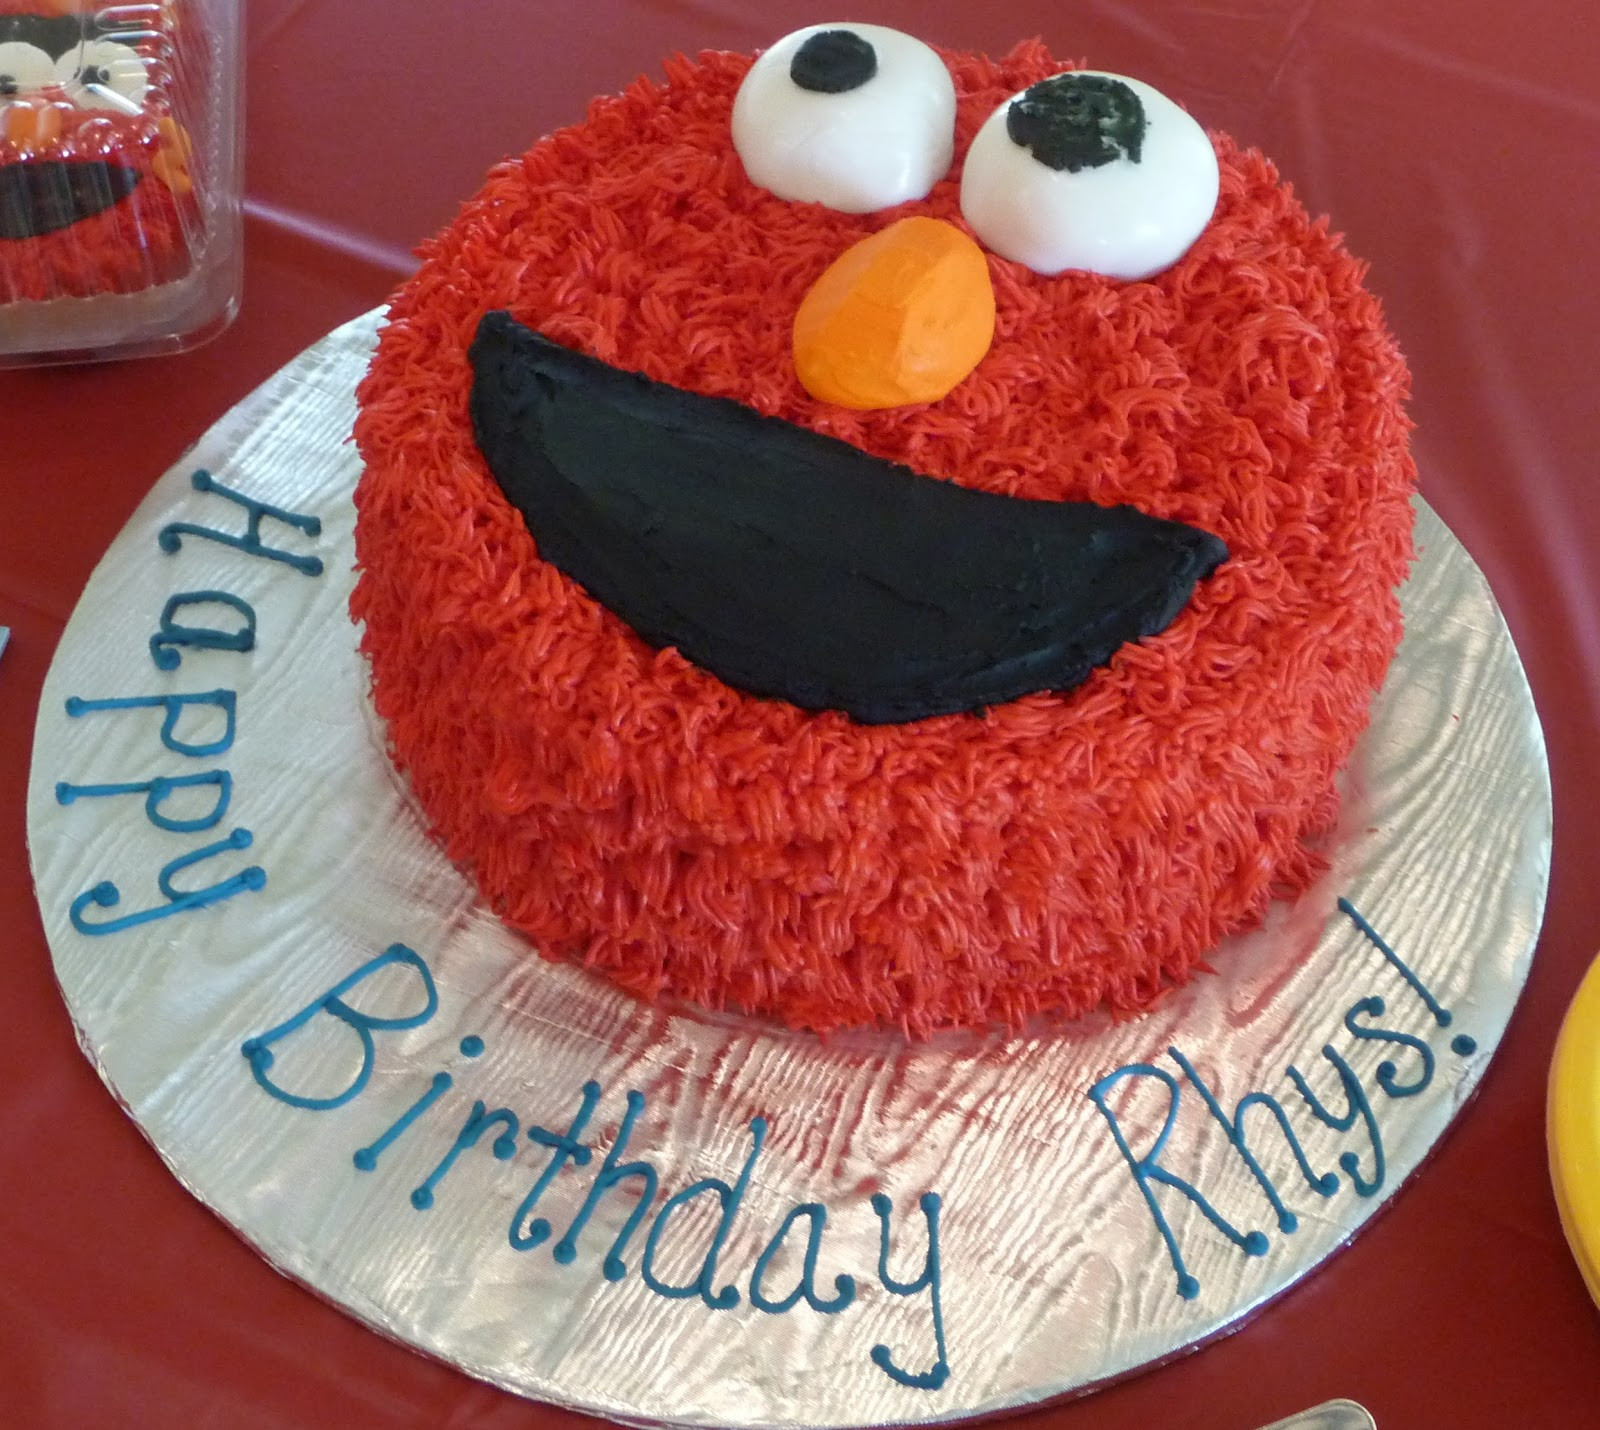 Elmo Birthday Cakes
 Cakewalk Elmo Cake by Sweet T s Sweets